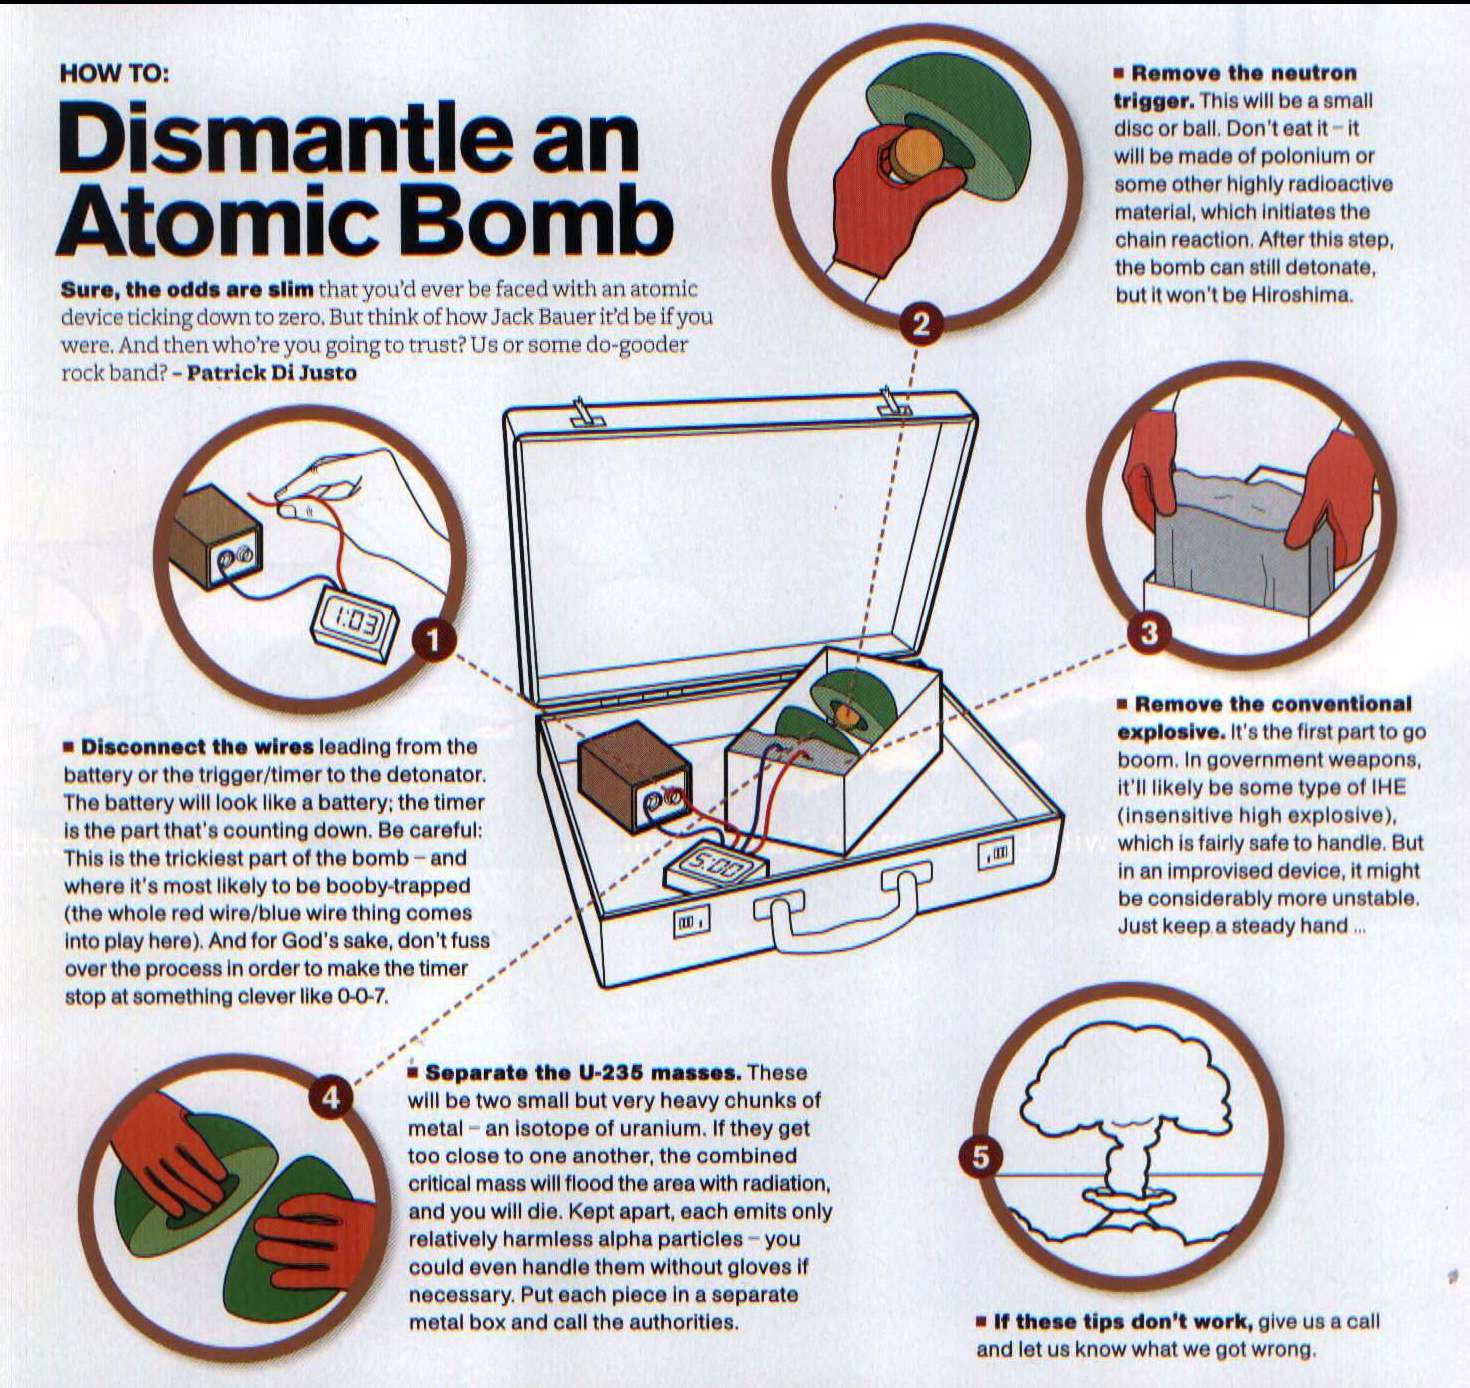 [atomic_bomb1.jpg]